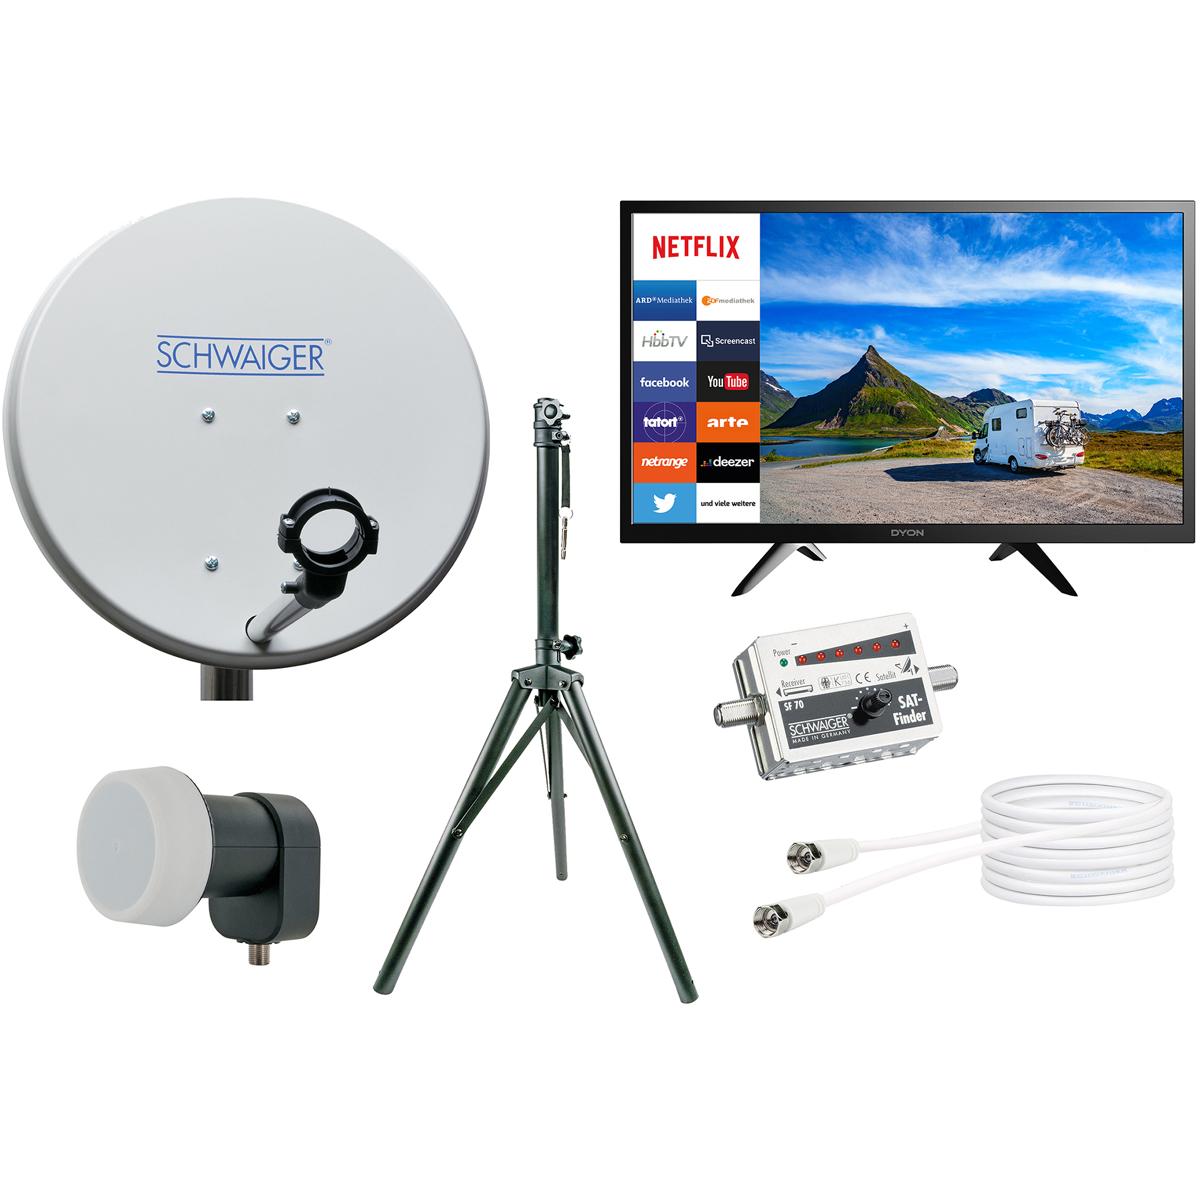 Manuelle SAT-Antenne Precision 65cm, Mobile Sat-Anlage, 12 Volt  Fernseher, Camping Sat-Anlage, Multimedia, Camping-Shop